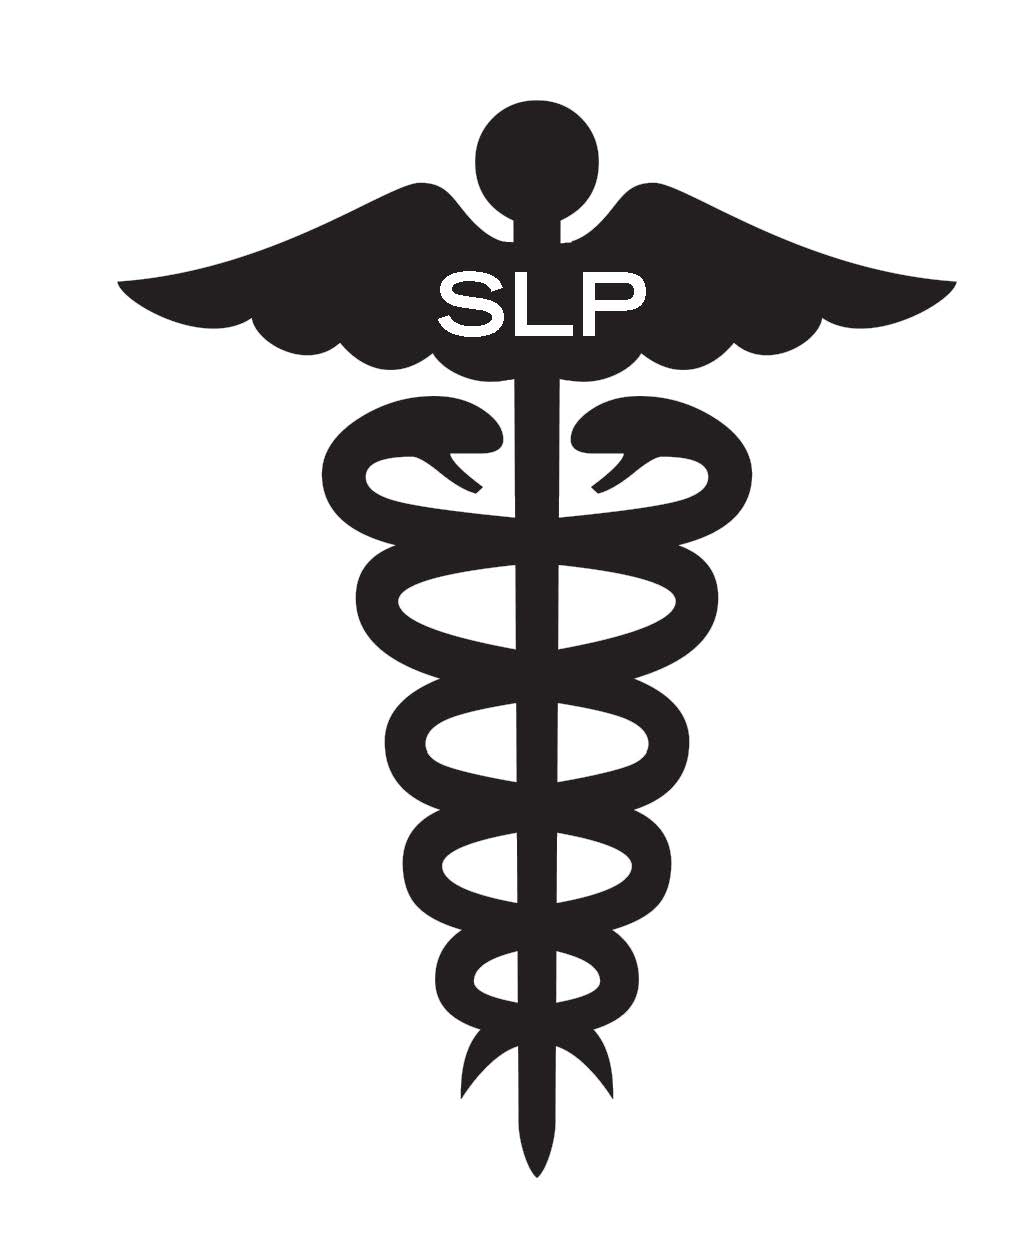 Speech Language Pathology Logo